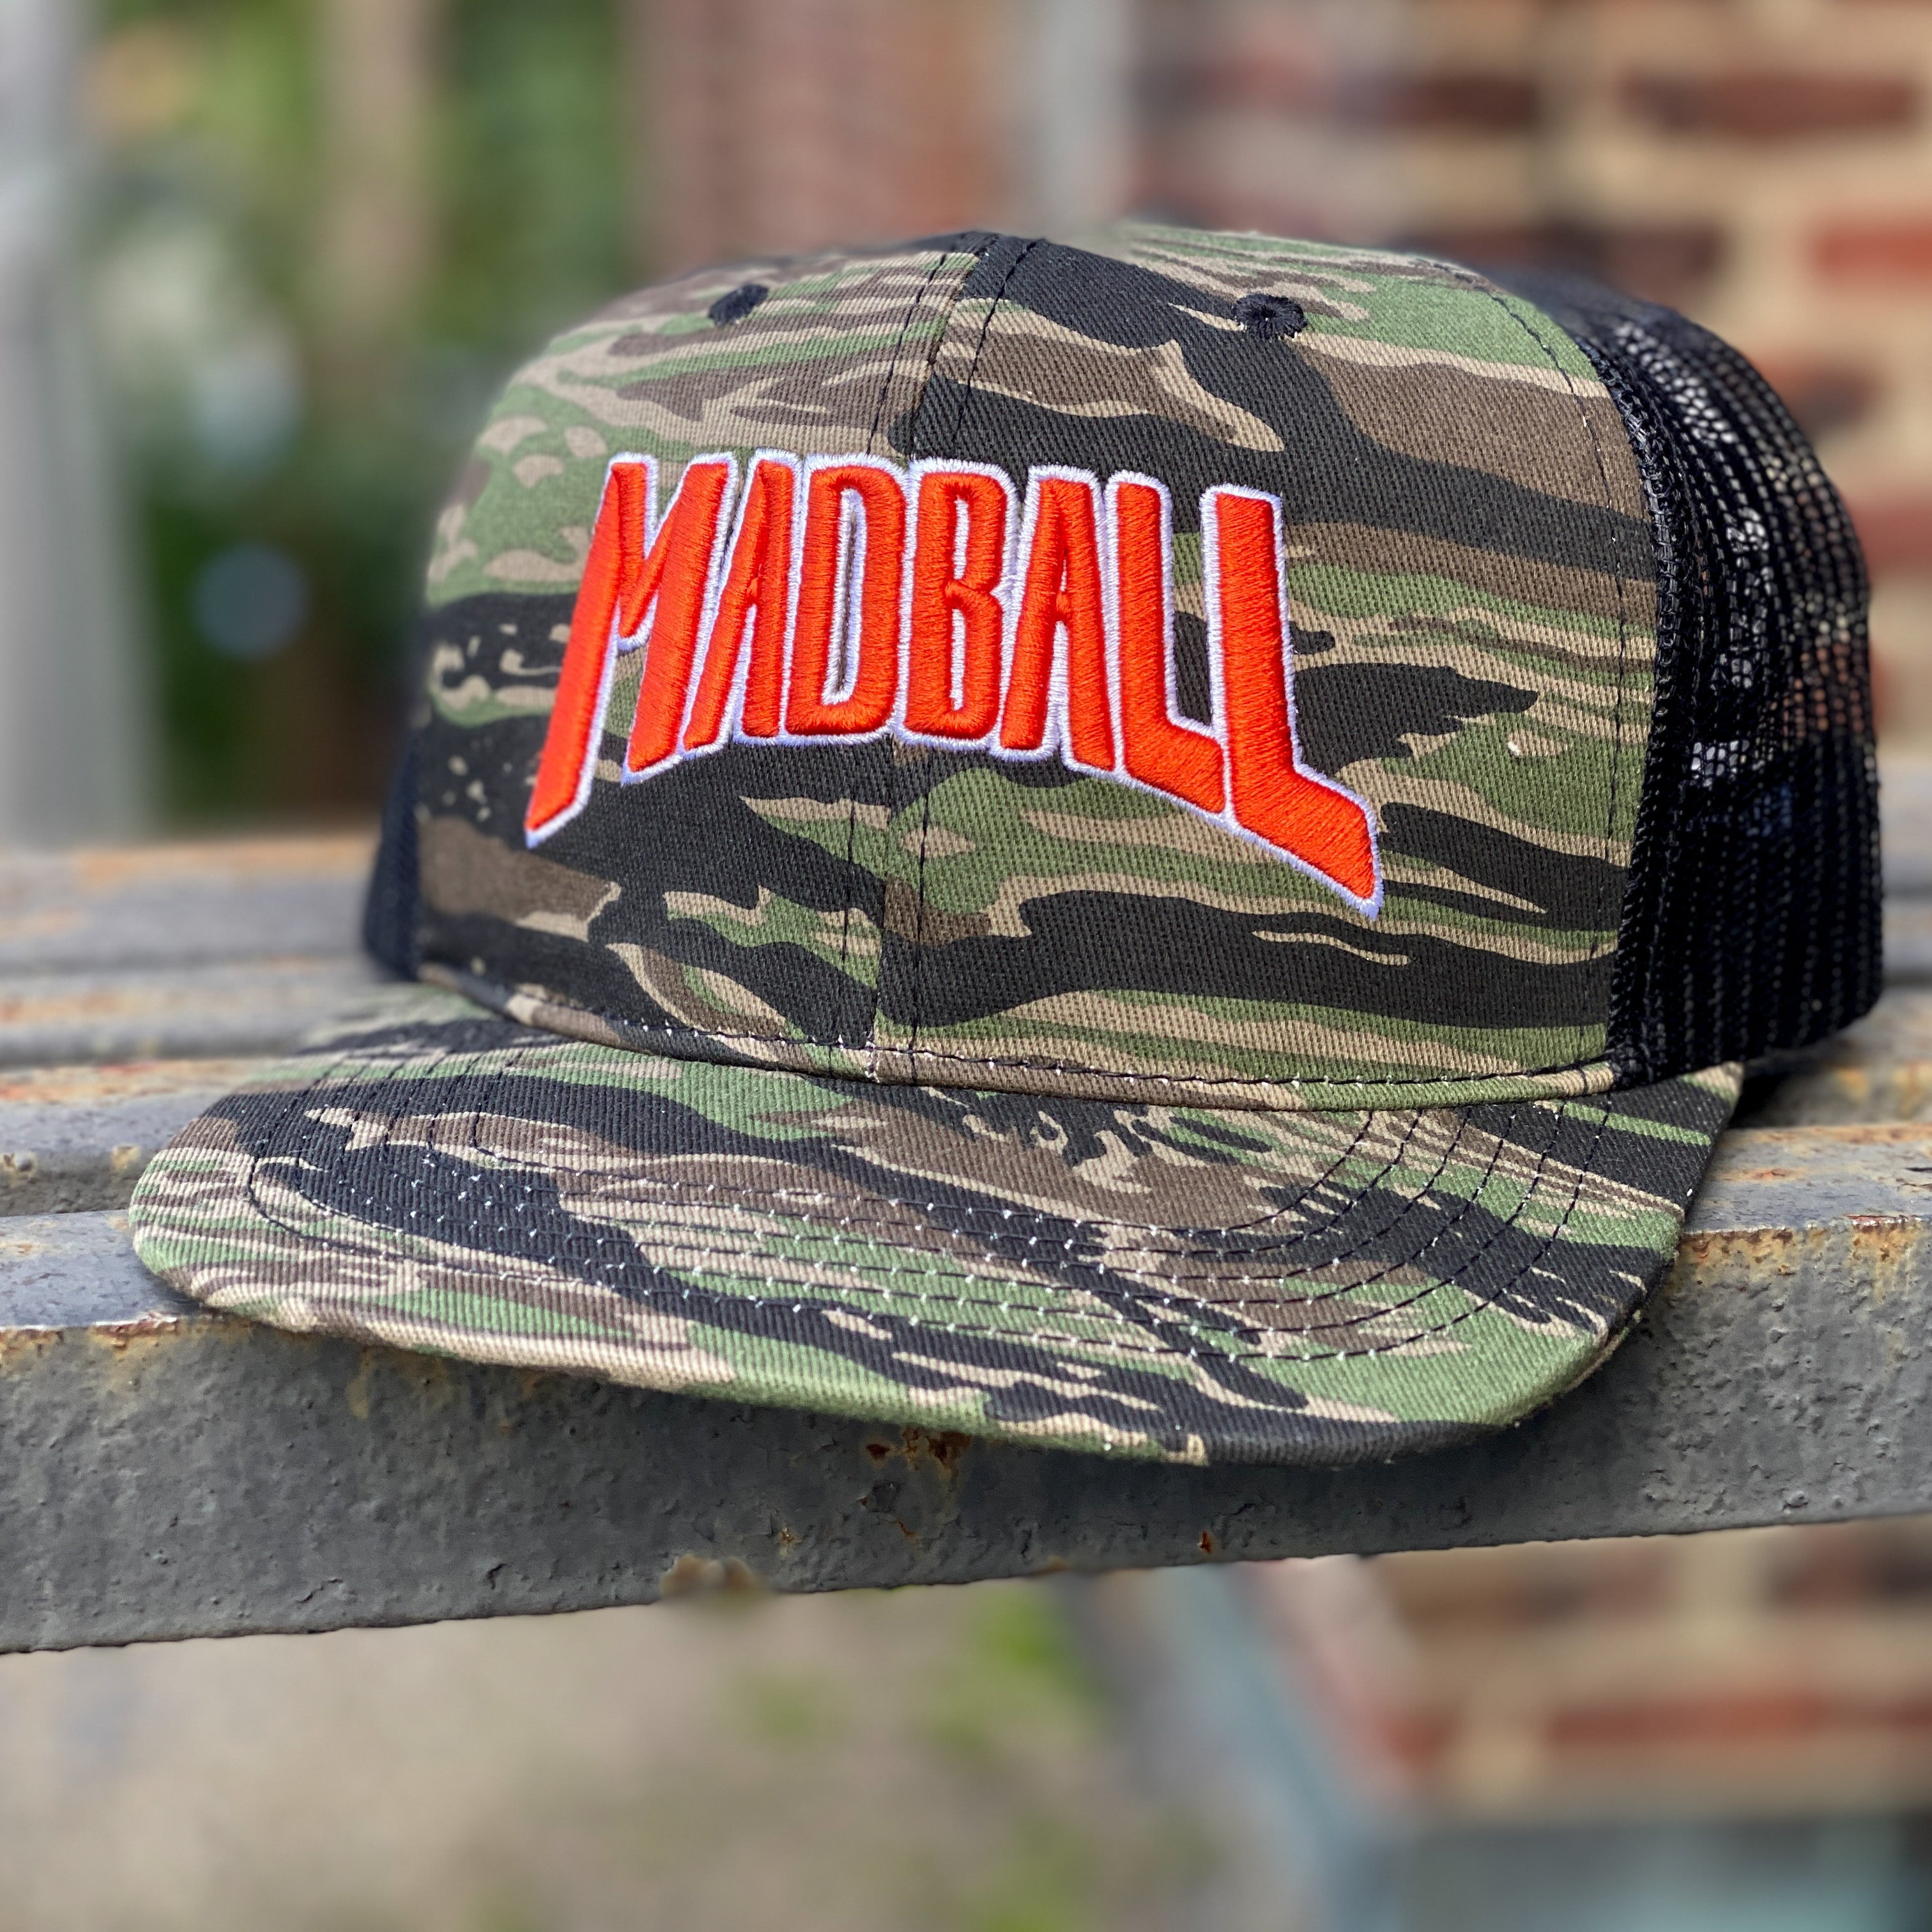 Madball / Omerta Logo Tiger Camo Meshback Hat